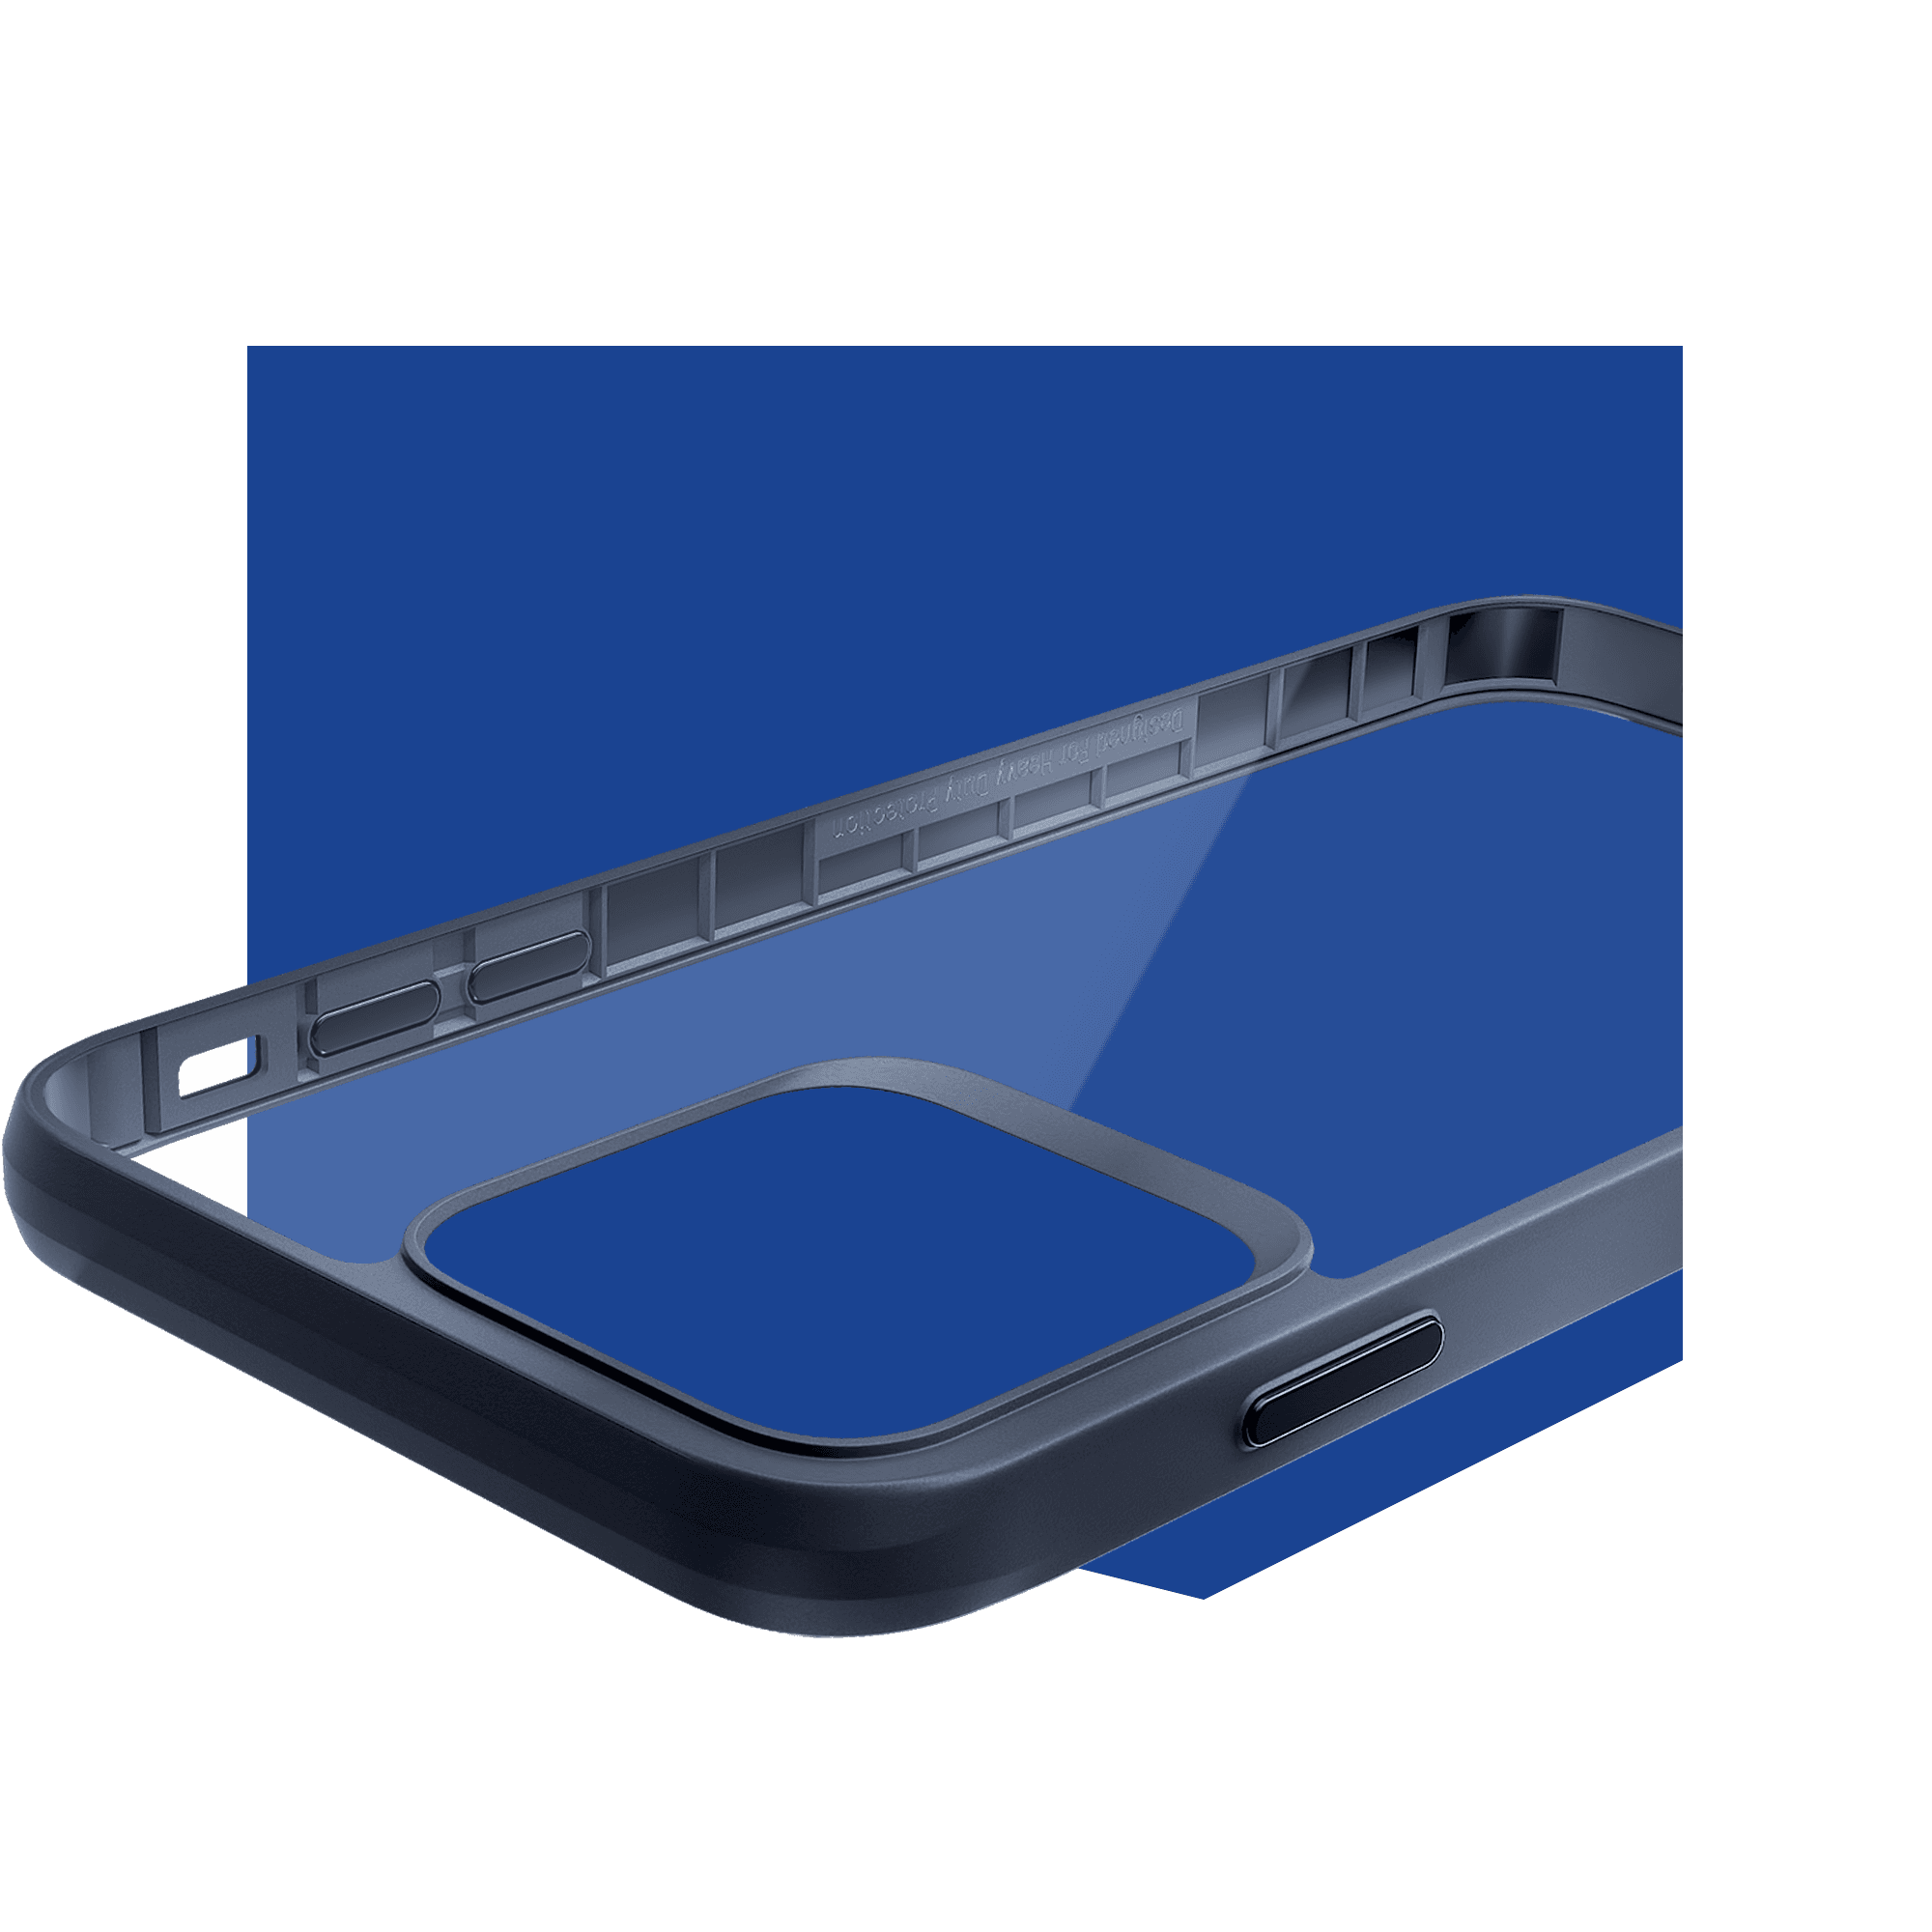 3mk Satin Armor Case+ - iPhone 12/12 Pro